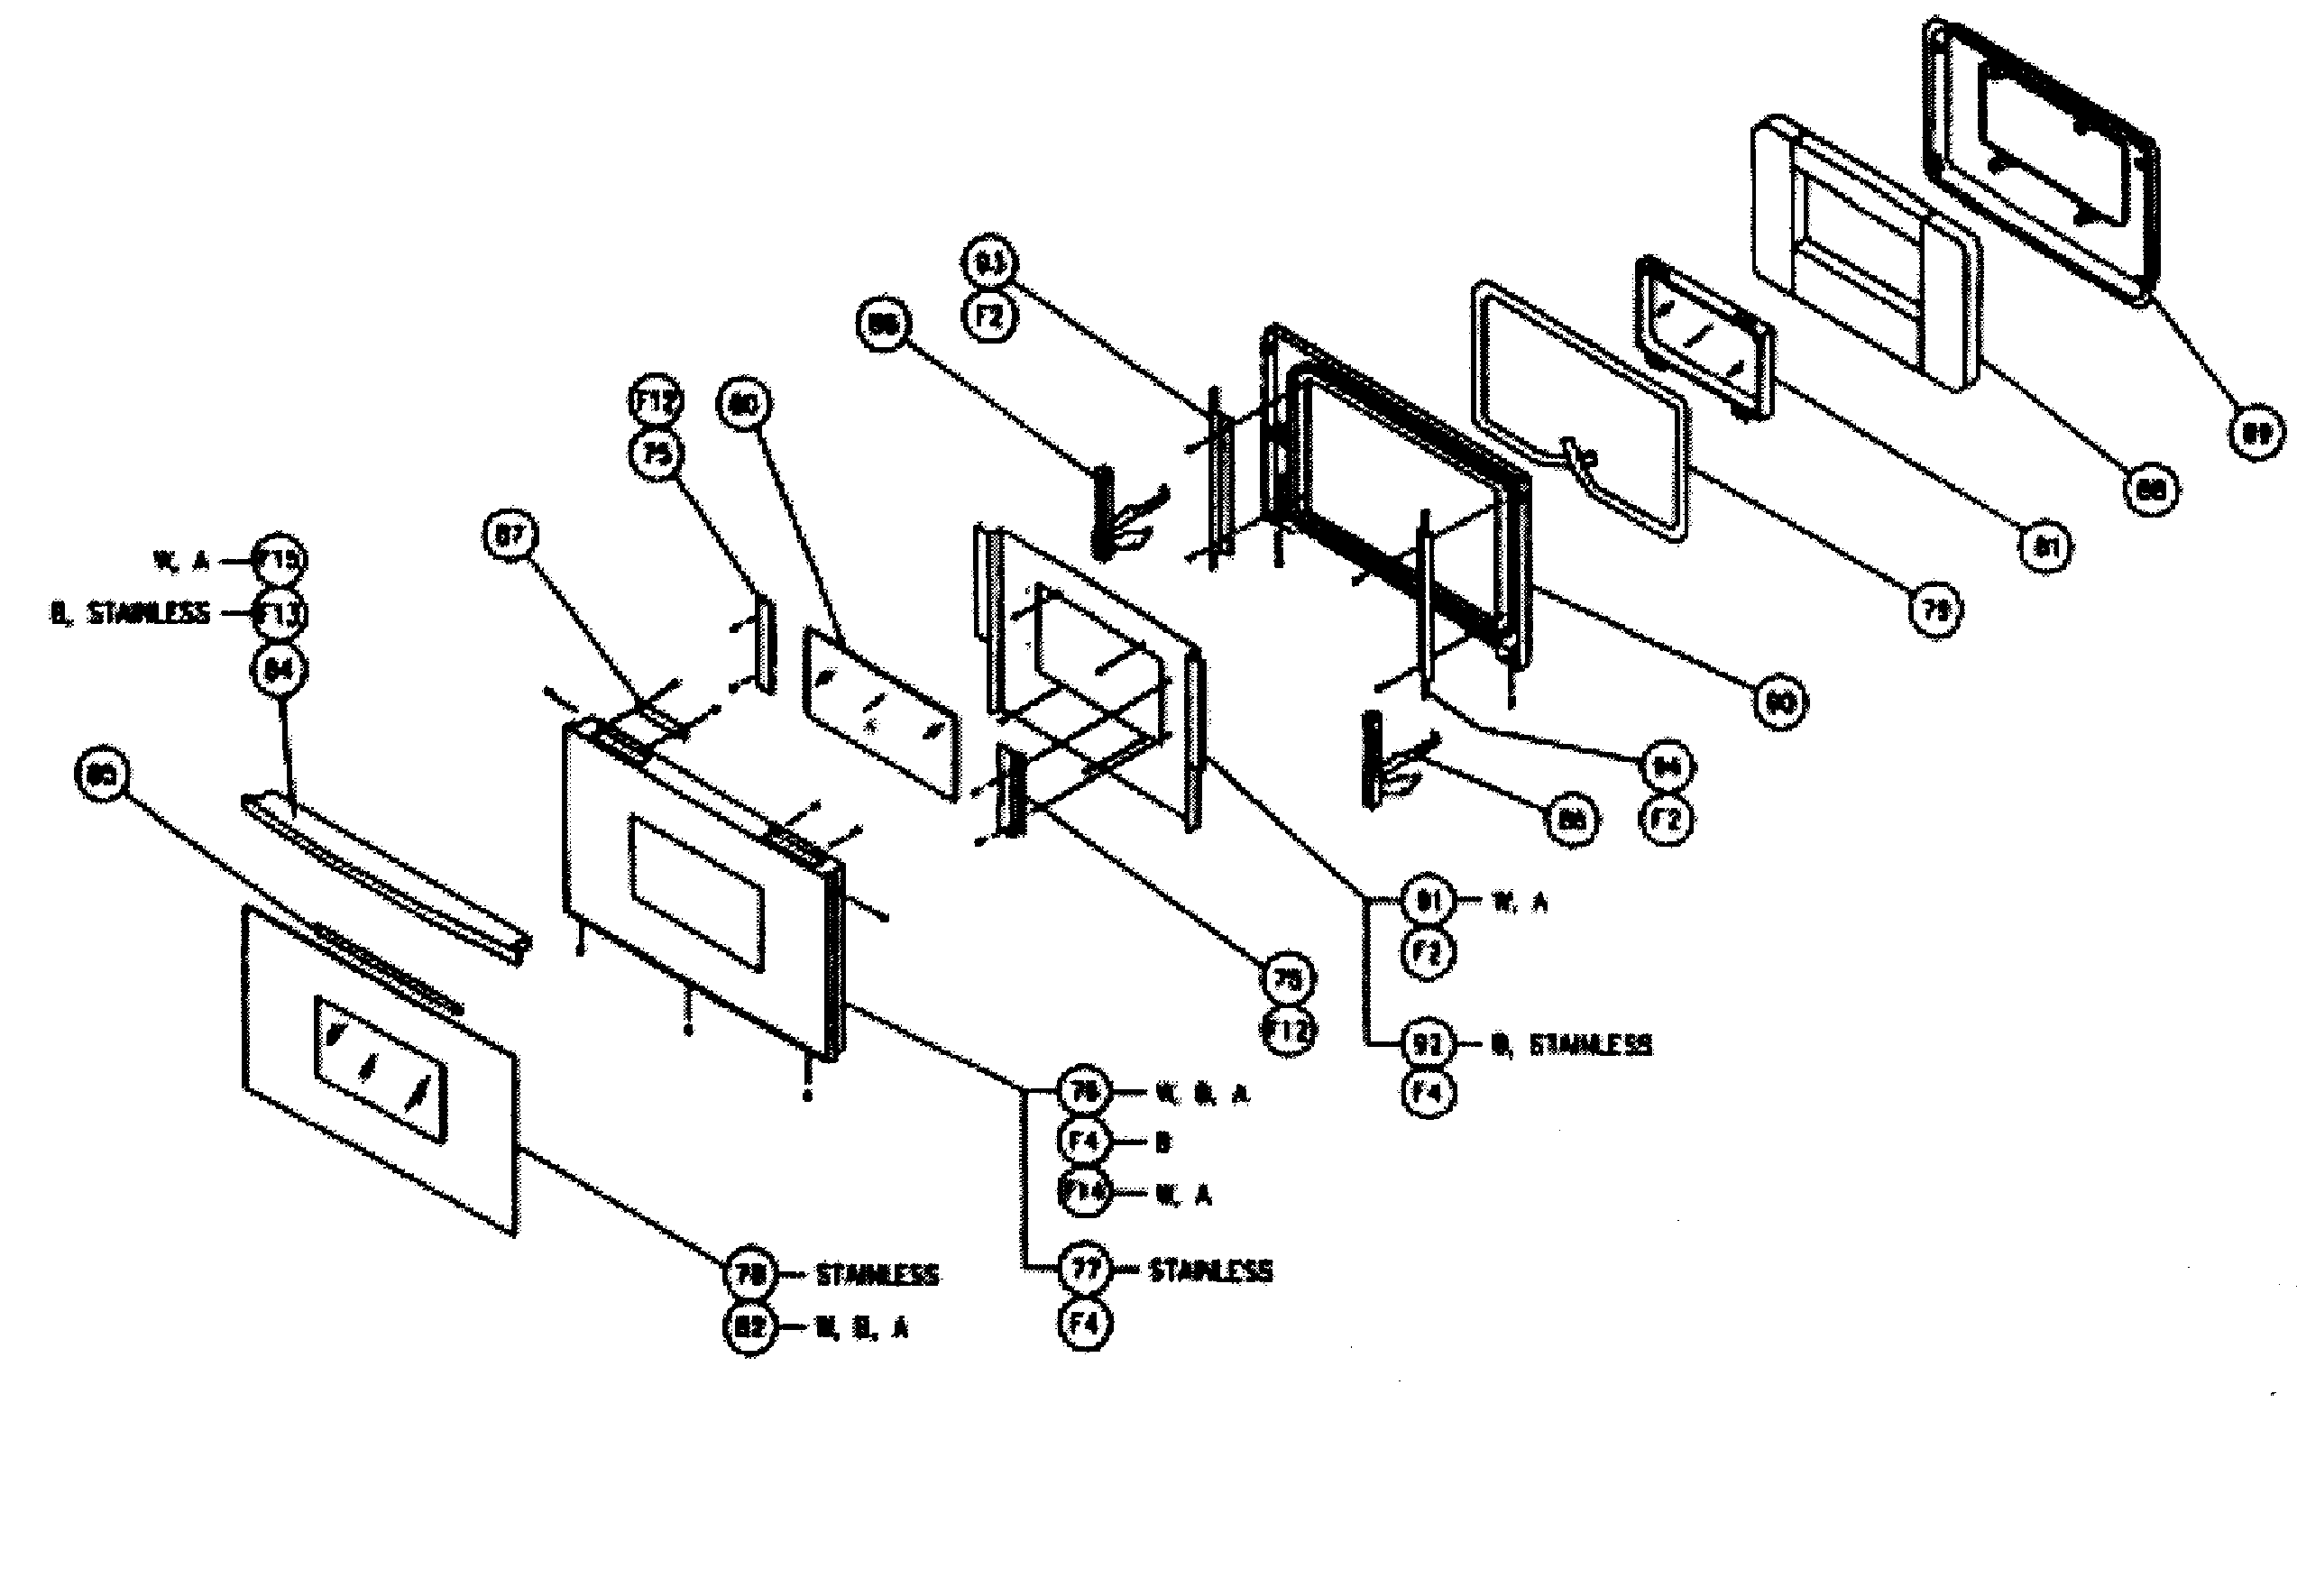 Dacor wall oven repair manual